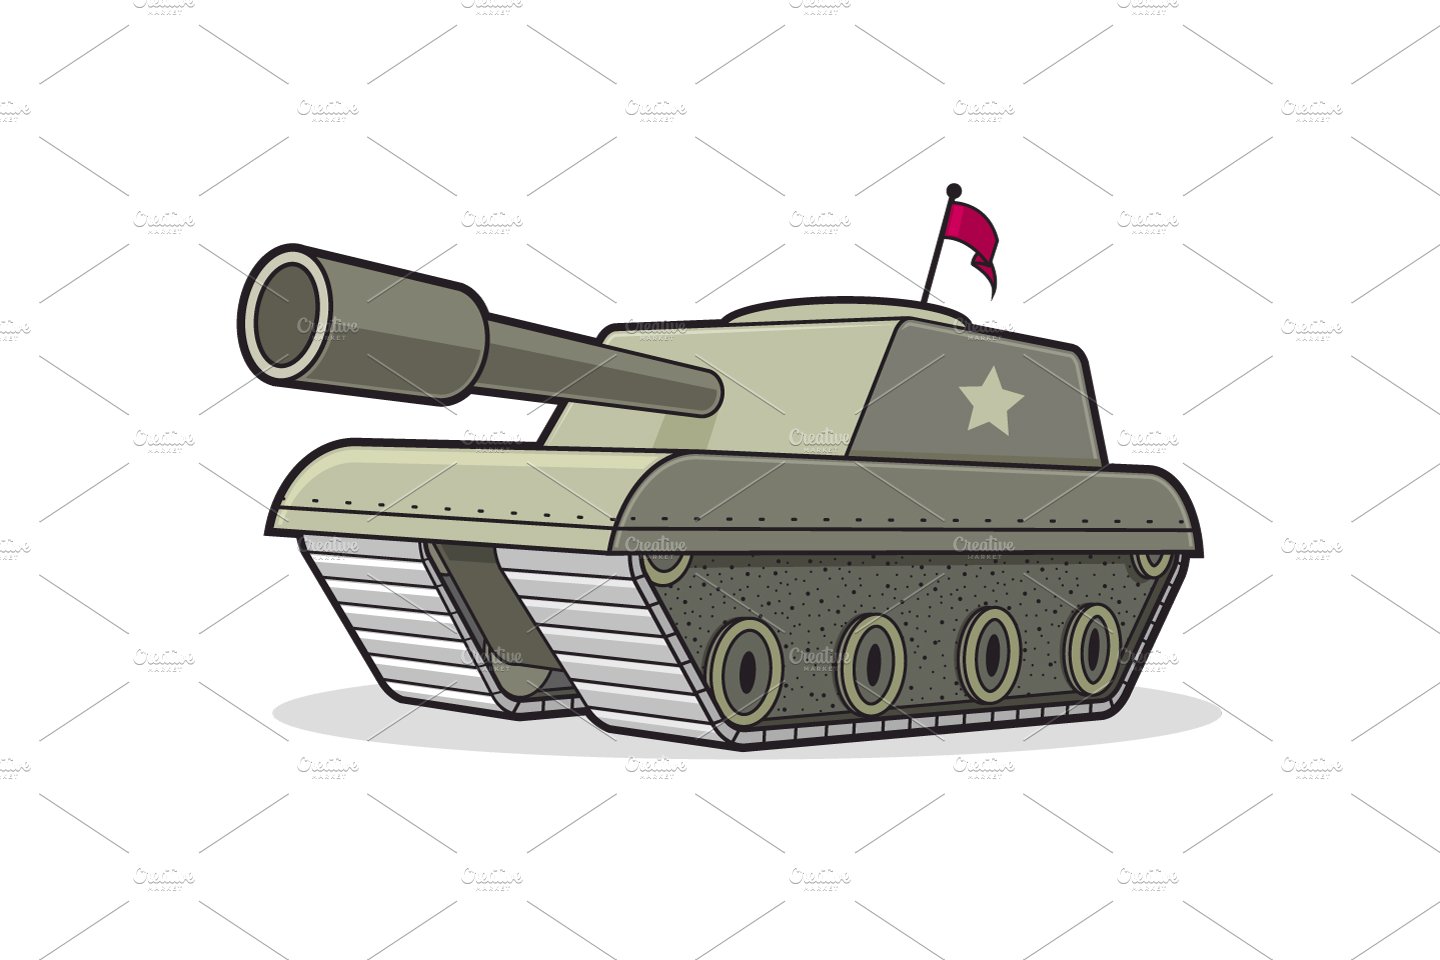 Battle Tank cover image.